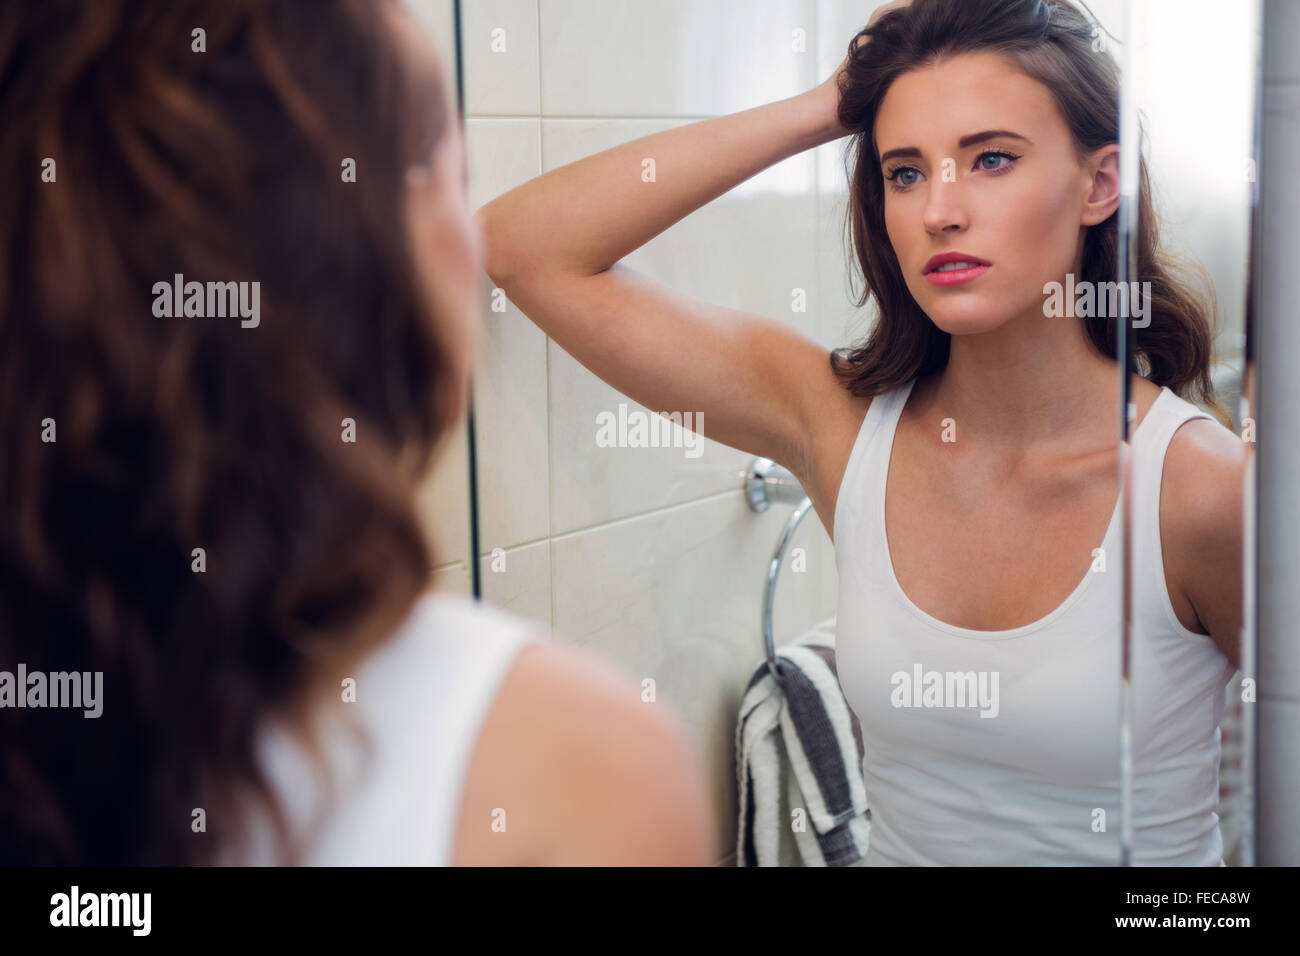 Beautiful Brunette Looking At Herself In The Bathroom Mirror Stock